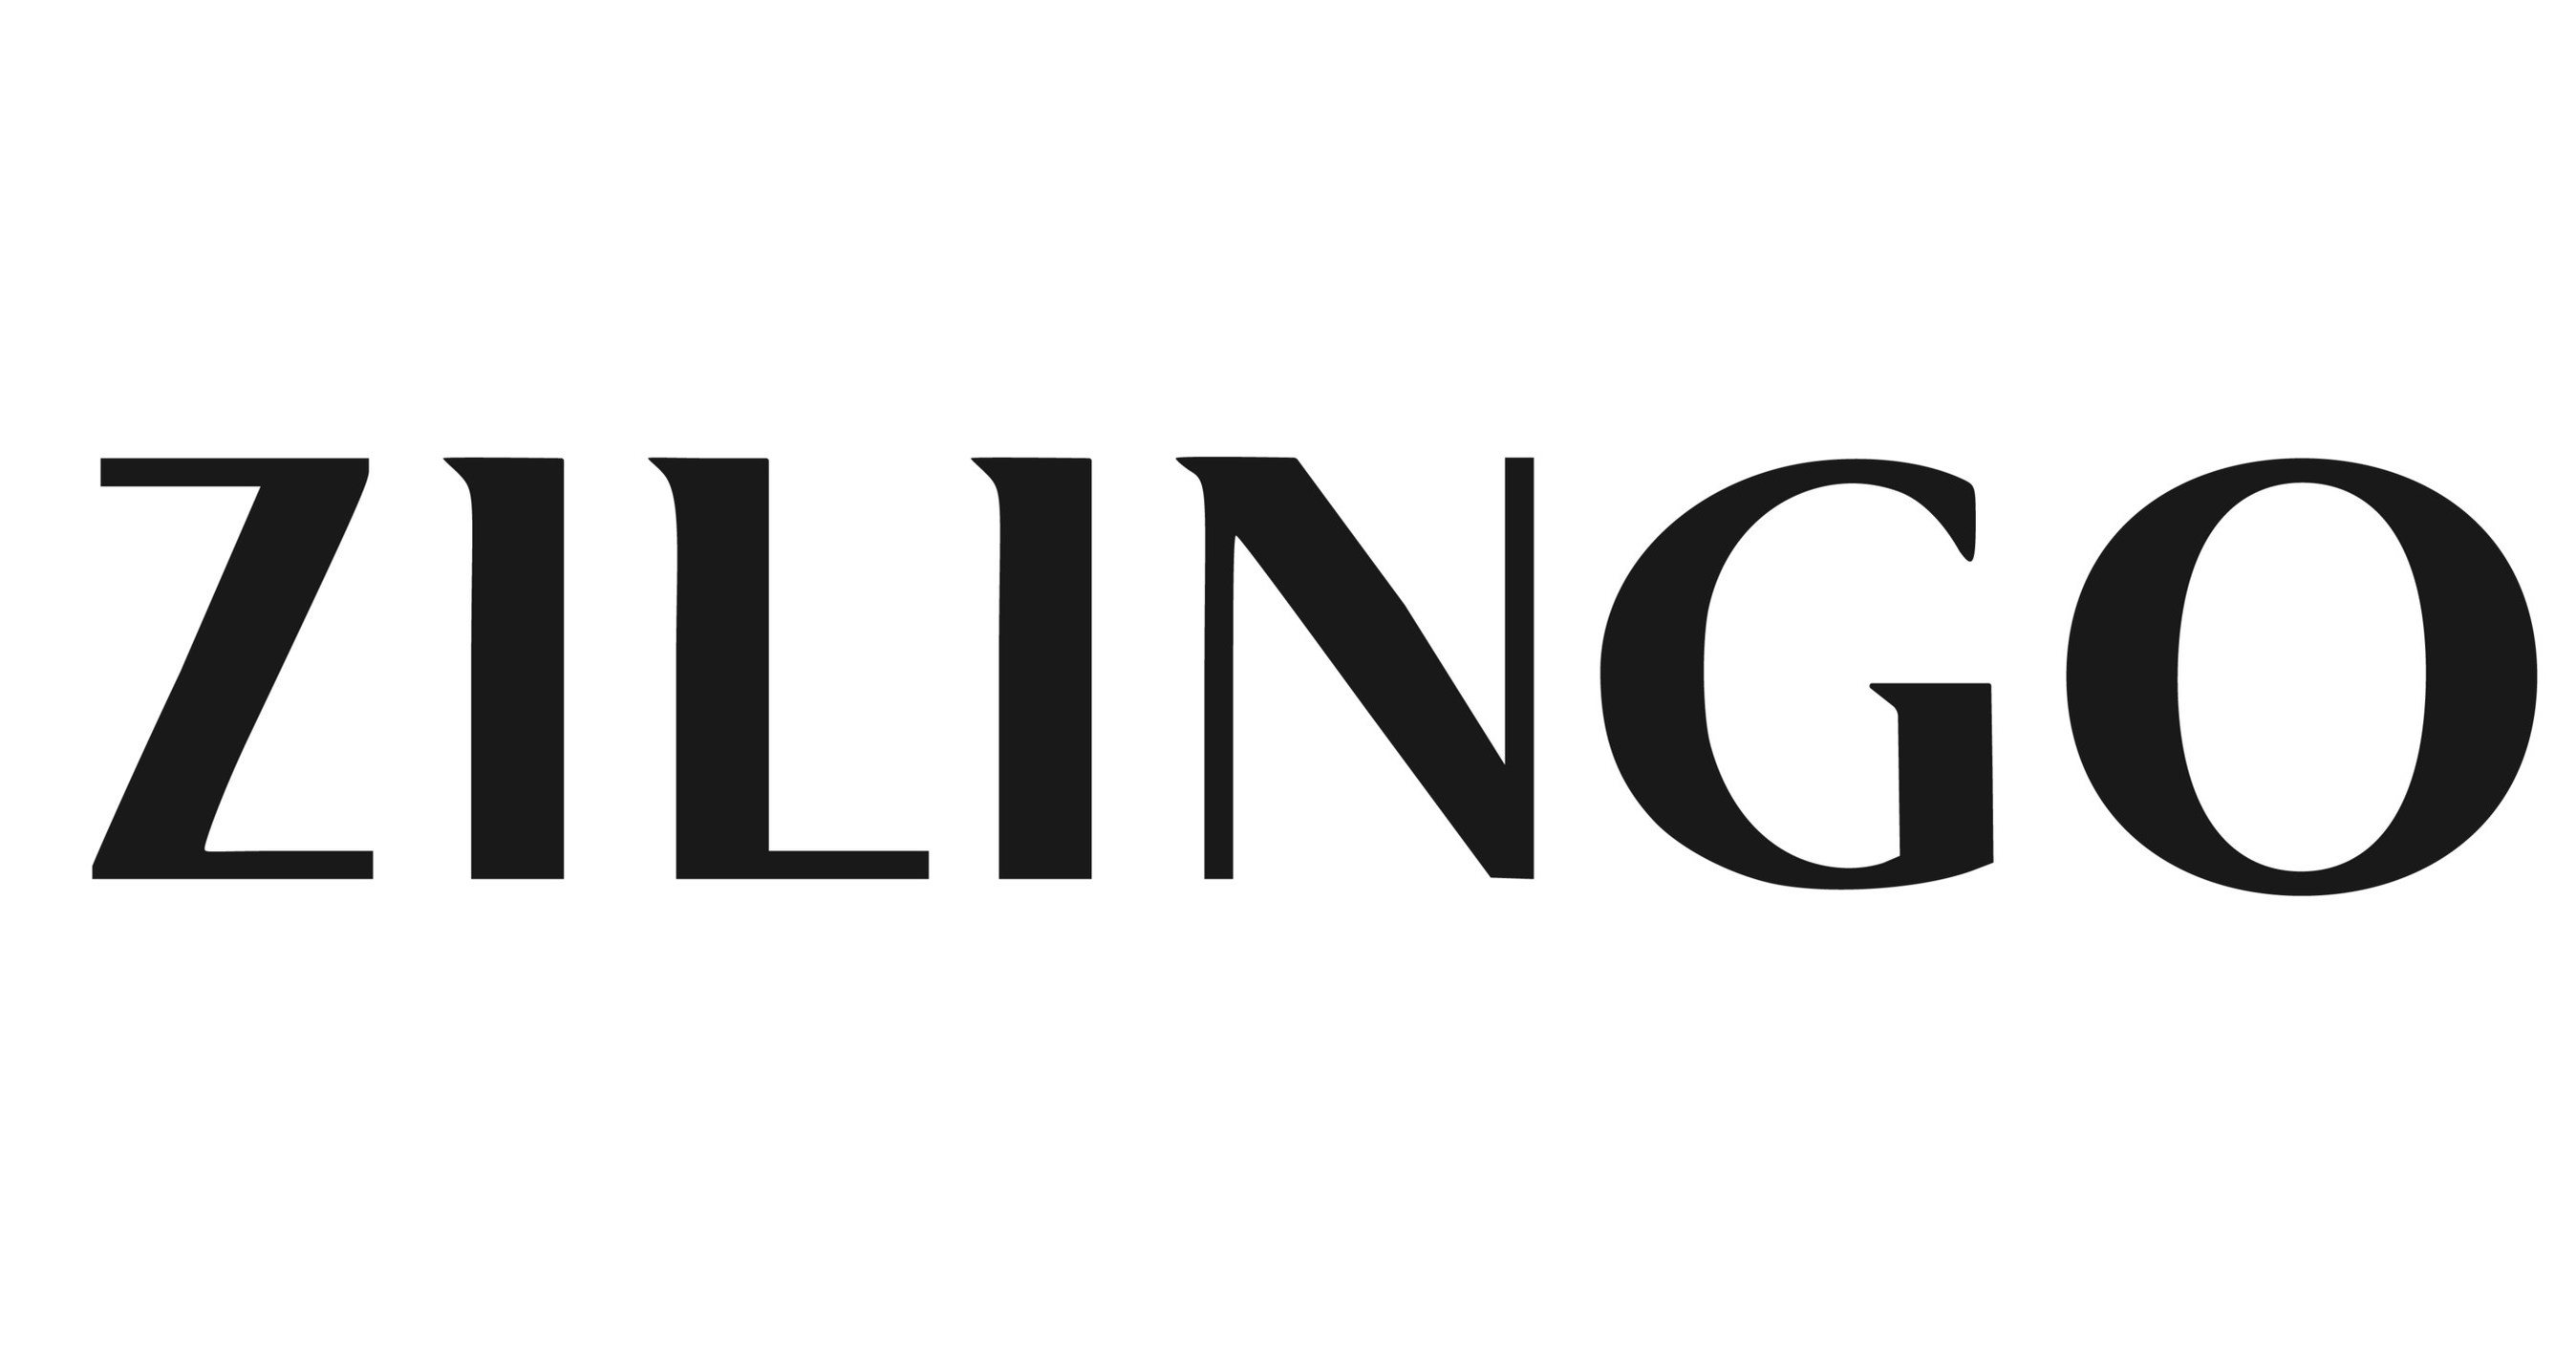 Zilingo startup company logo